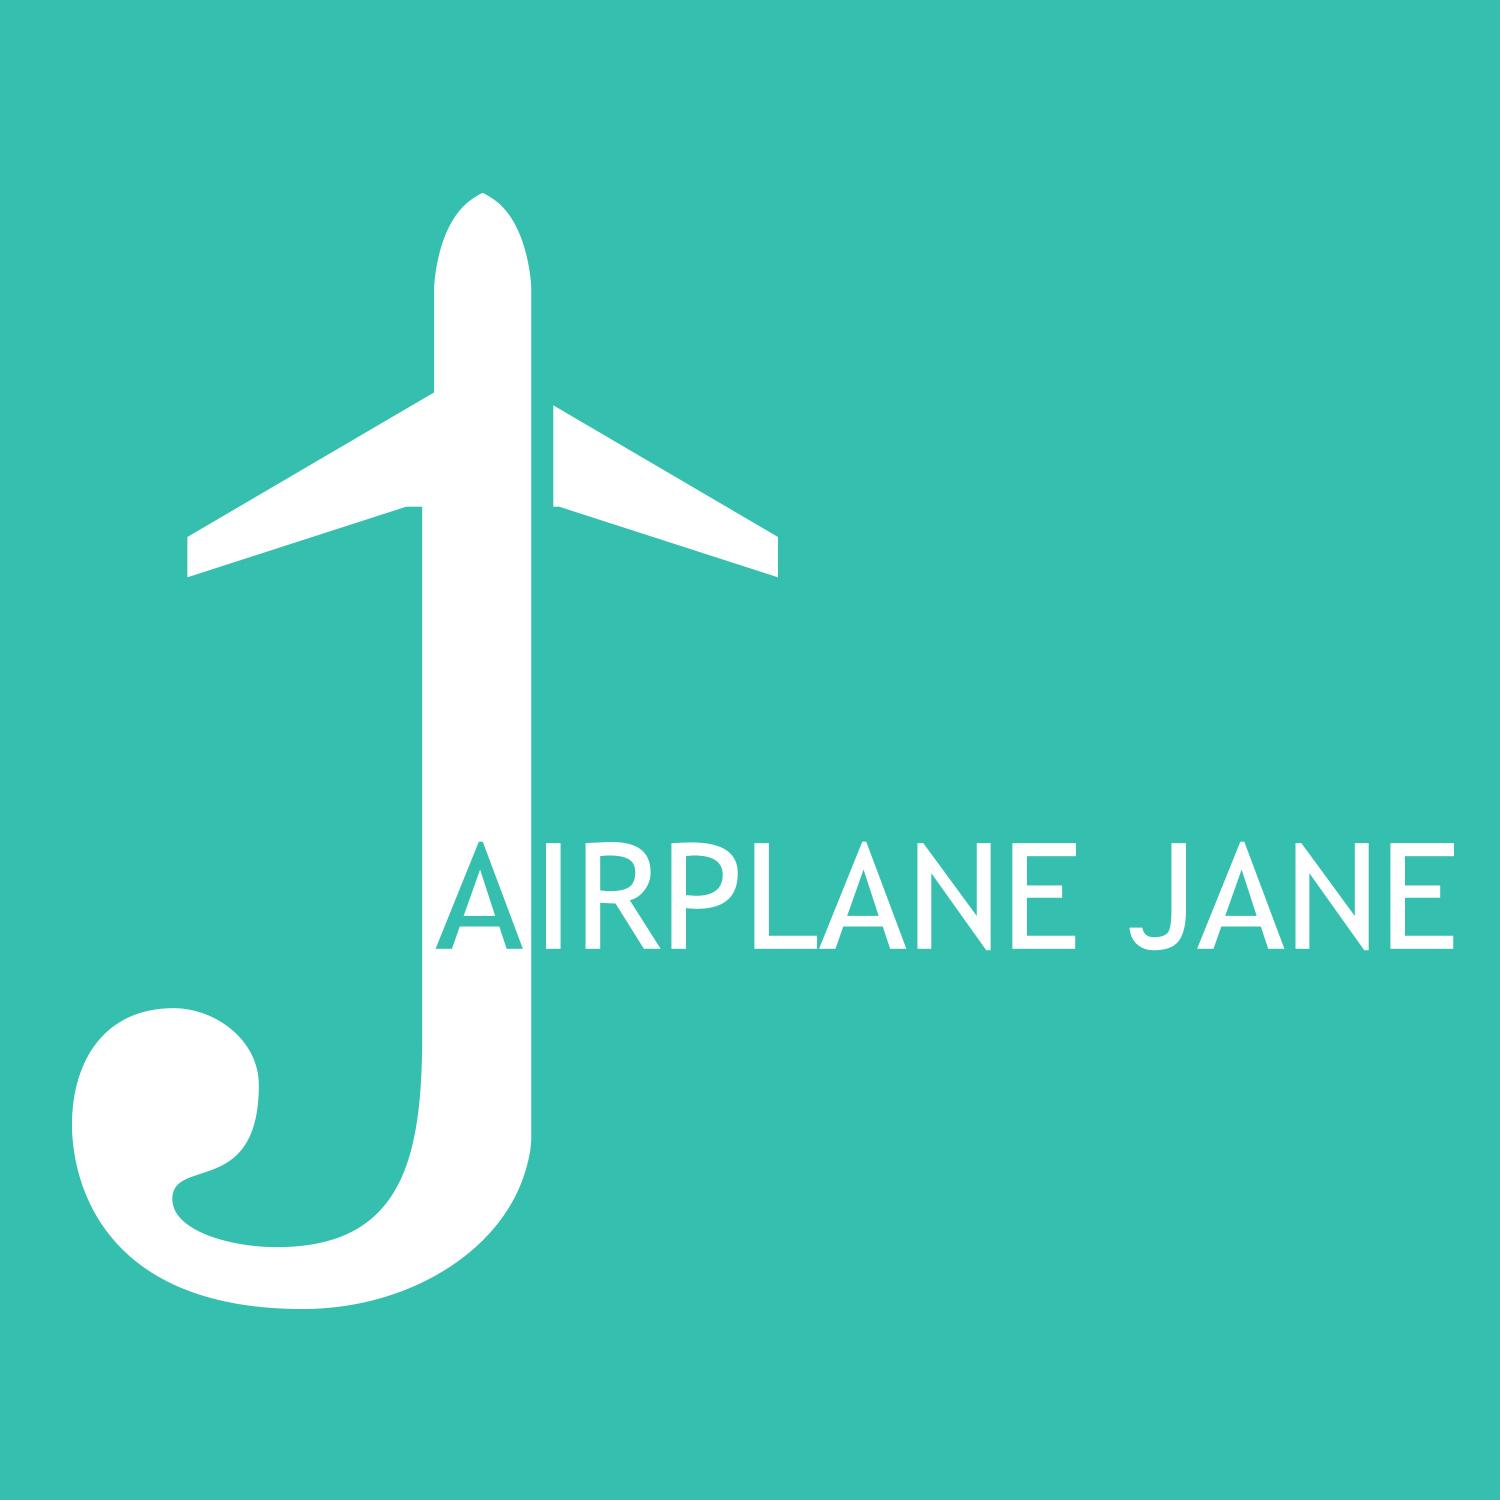 Jane Logo - ARCADE. AIRPLANE JANE LOGO